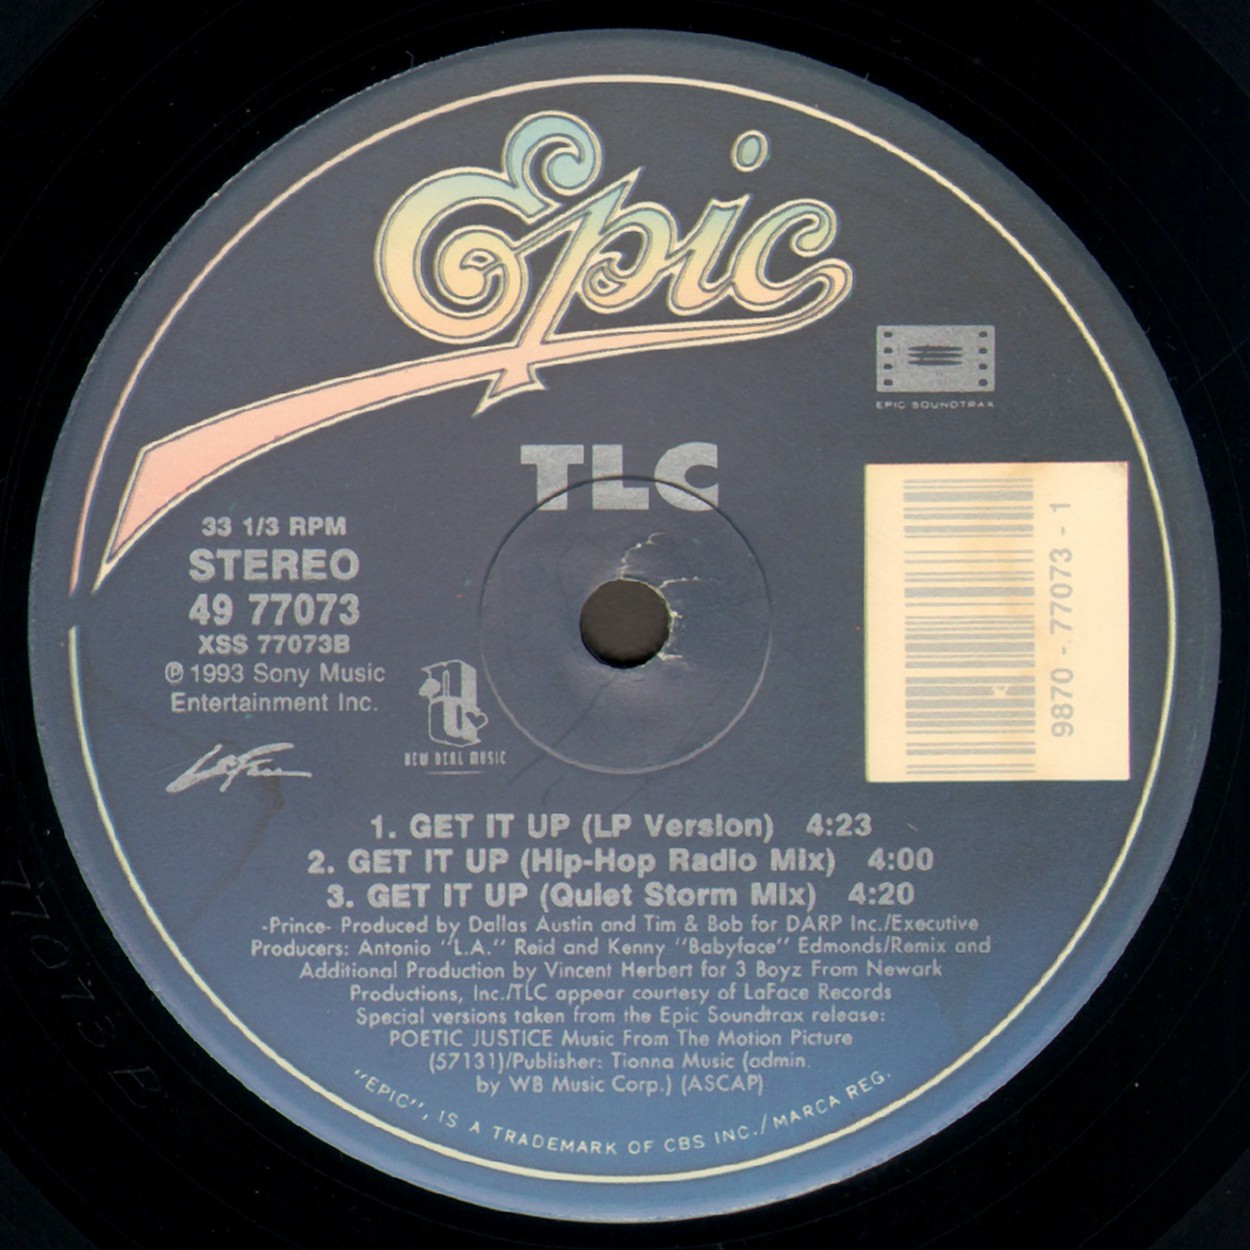 Download Music descarga blog: TLC - GET IT UP